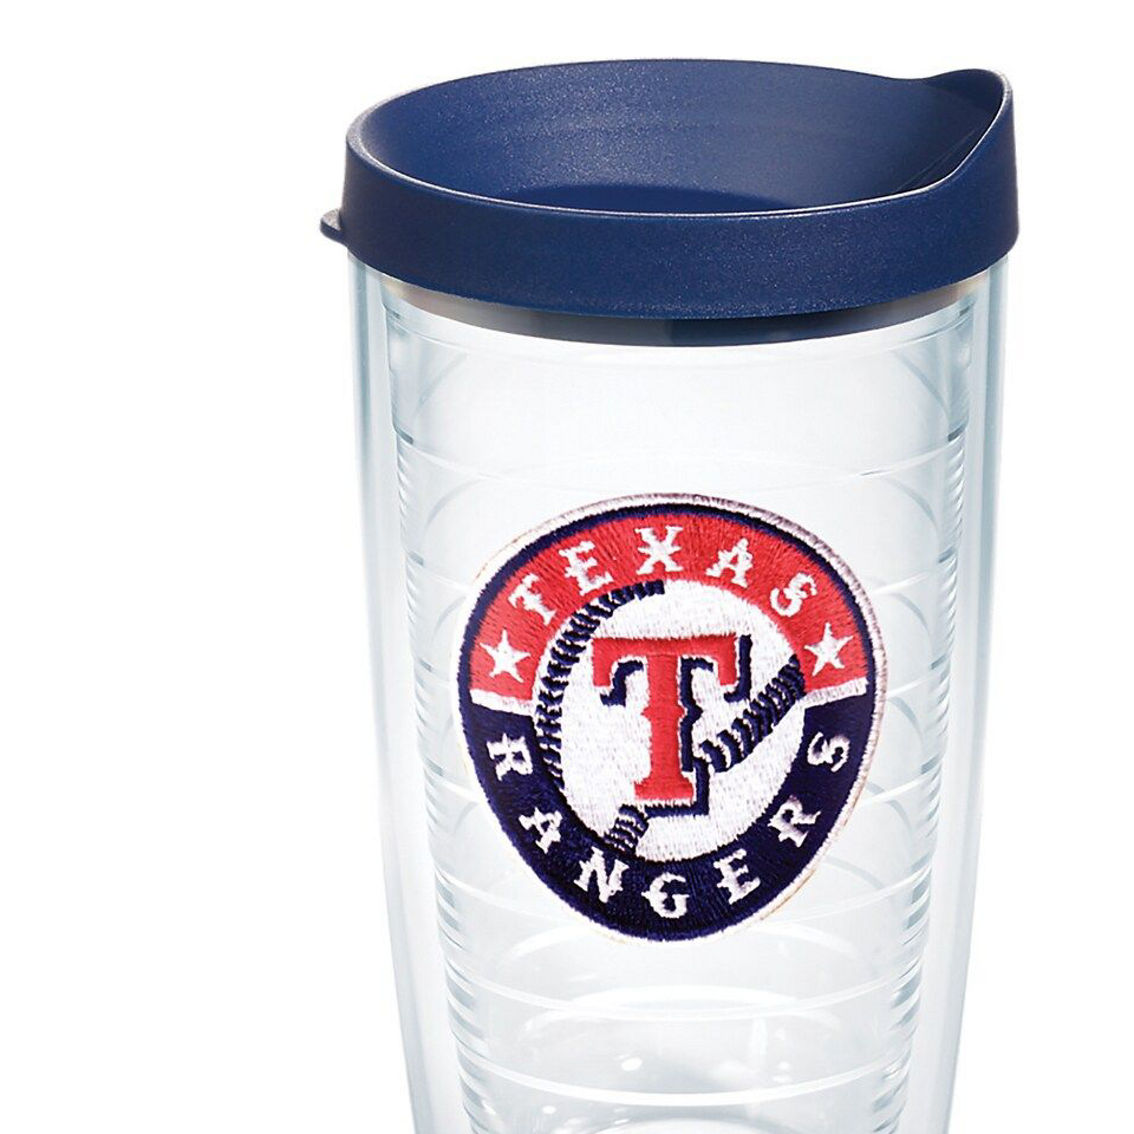 Tervis Texas Rangers 16oz. Emblem Classic Tumbler - Image 2 of 2